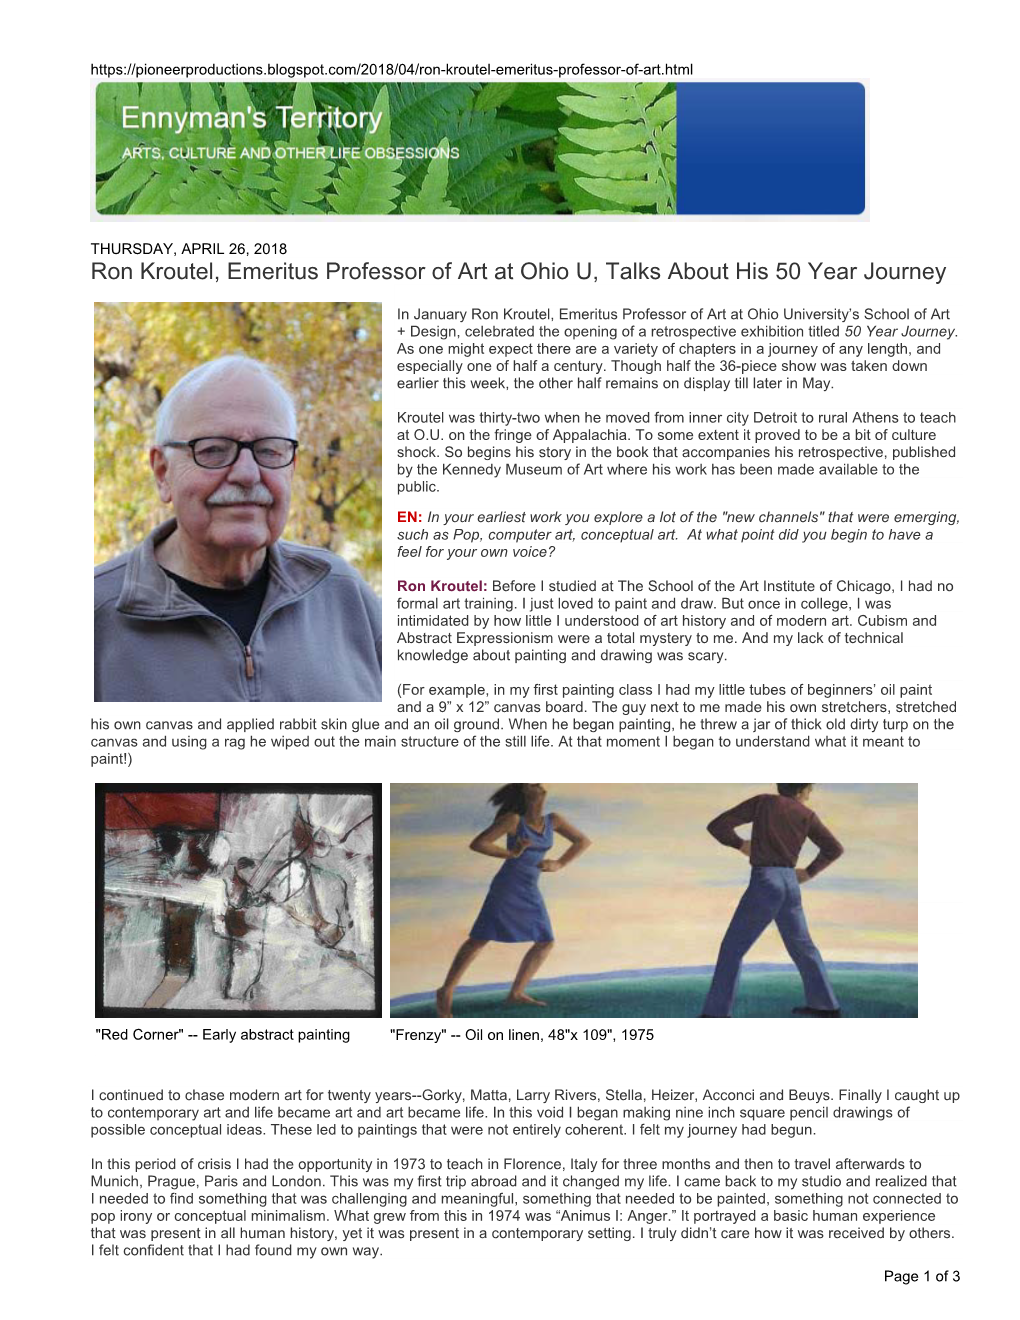 Ron Kroutel, Emeritus Professor of Art at Ohio U, Talks About His 50 Year Journey